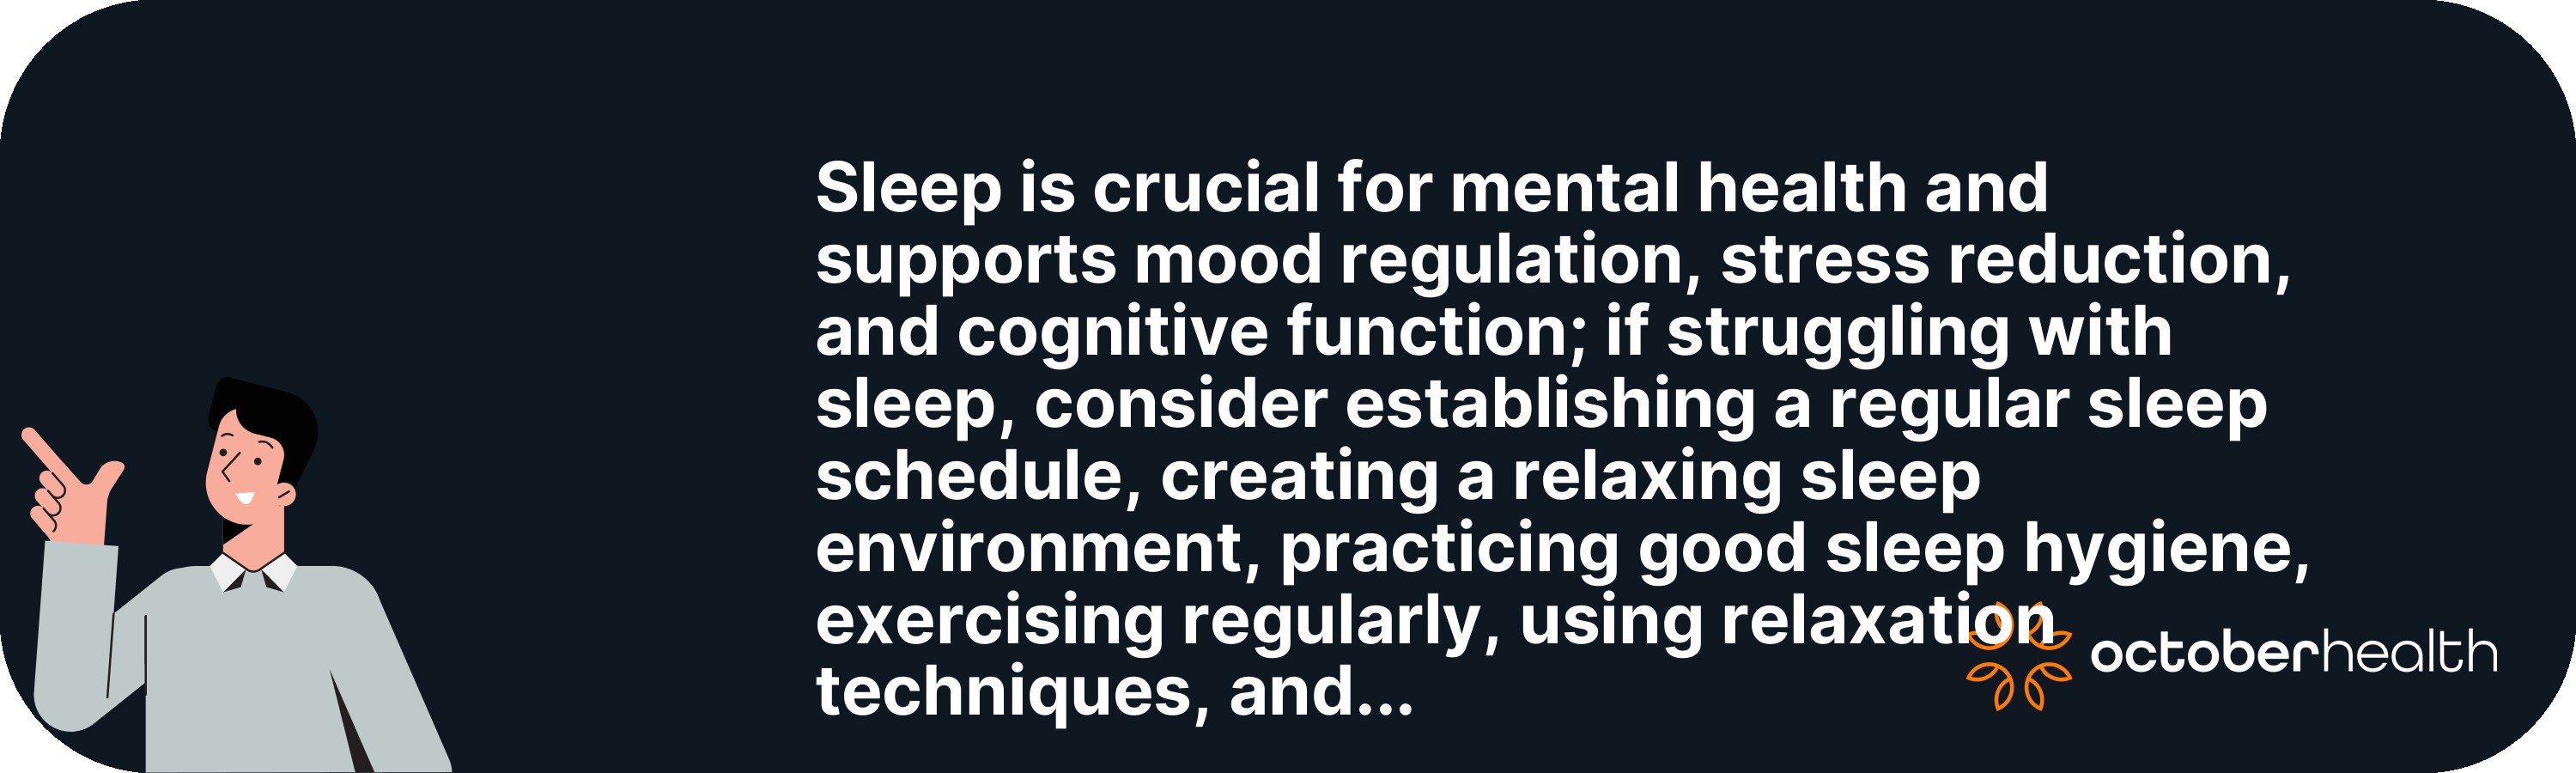 Sleep is crucial for mental health...